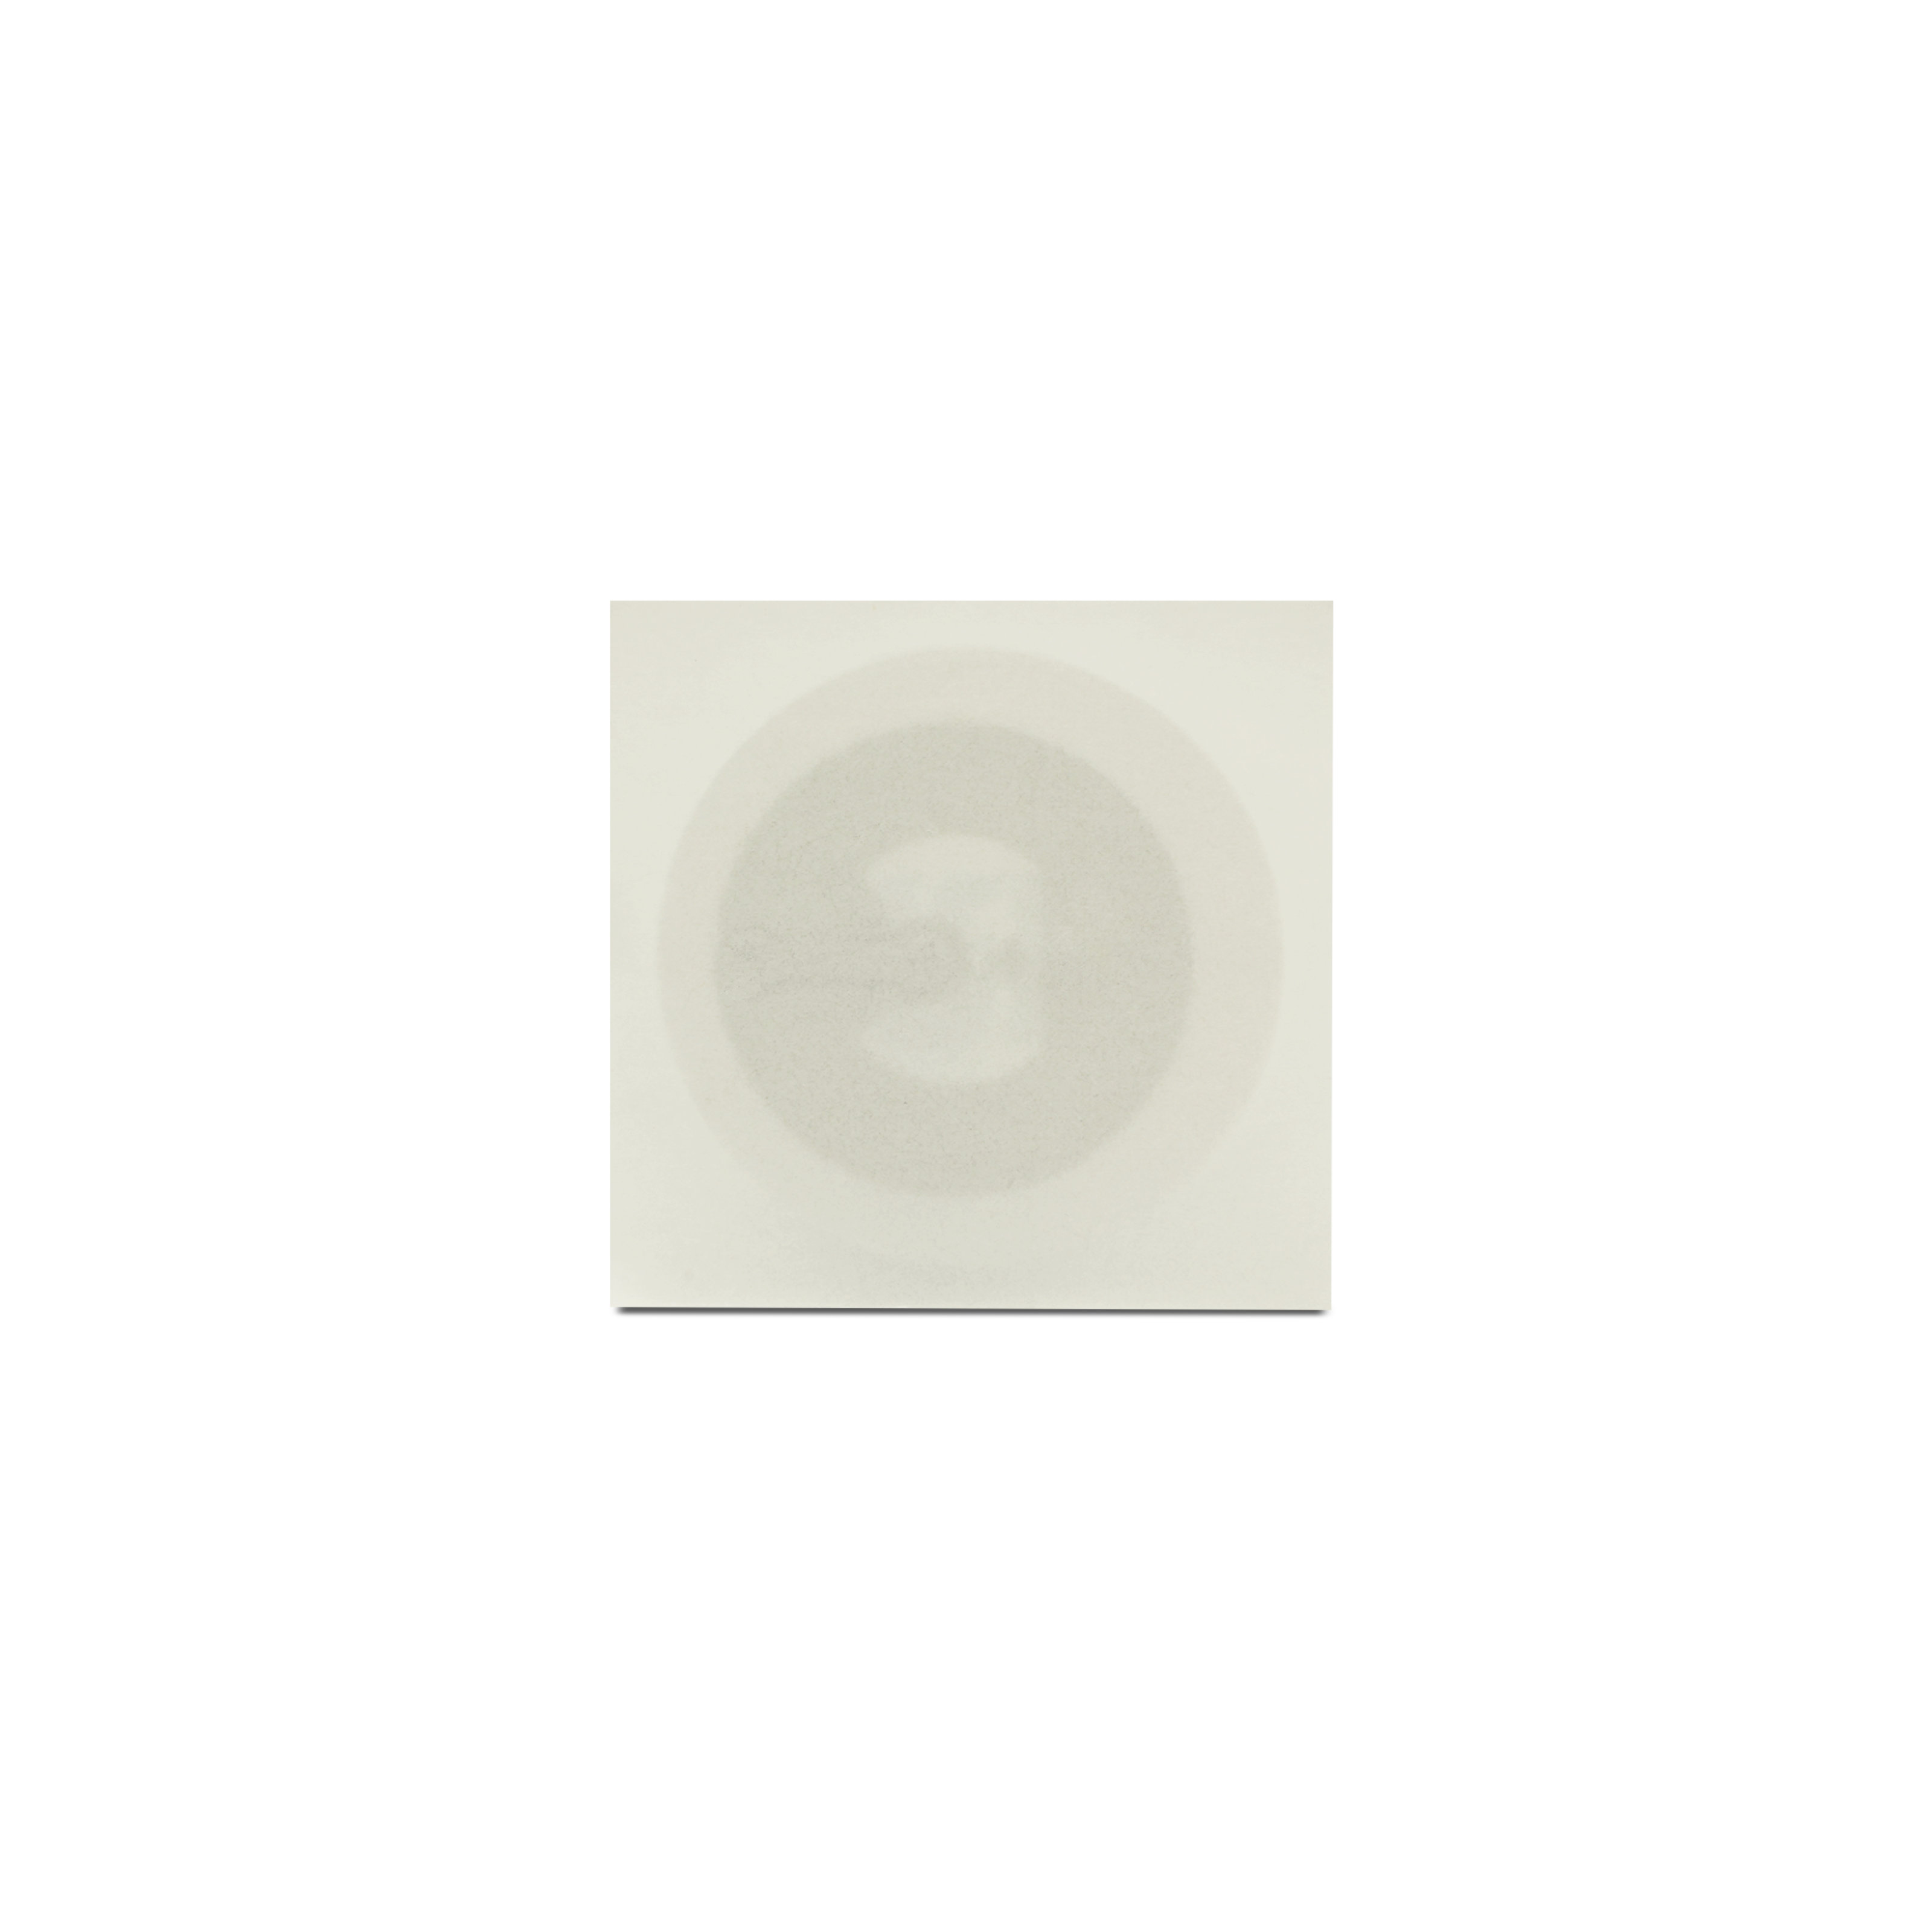 NFC Sticker PET - 30 mm - NTAG215 - 540 Byte - weiß mit Logo grau